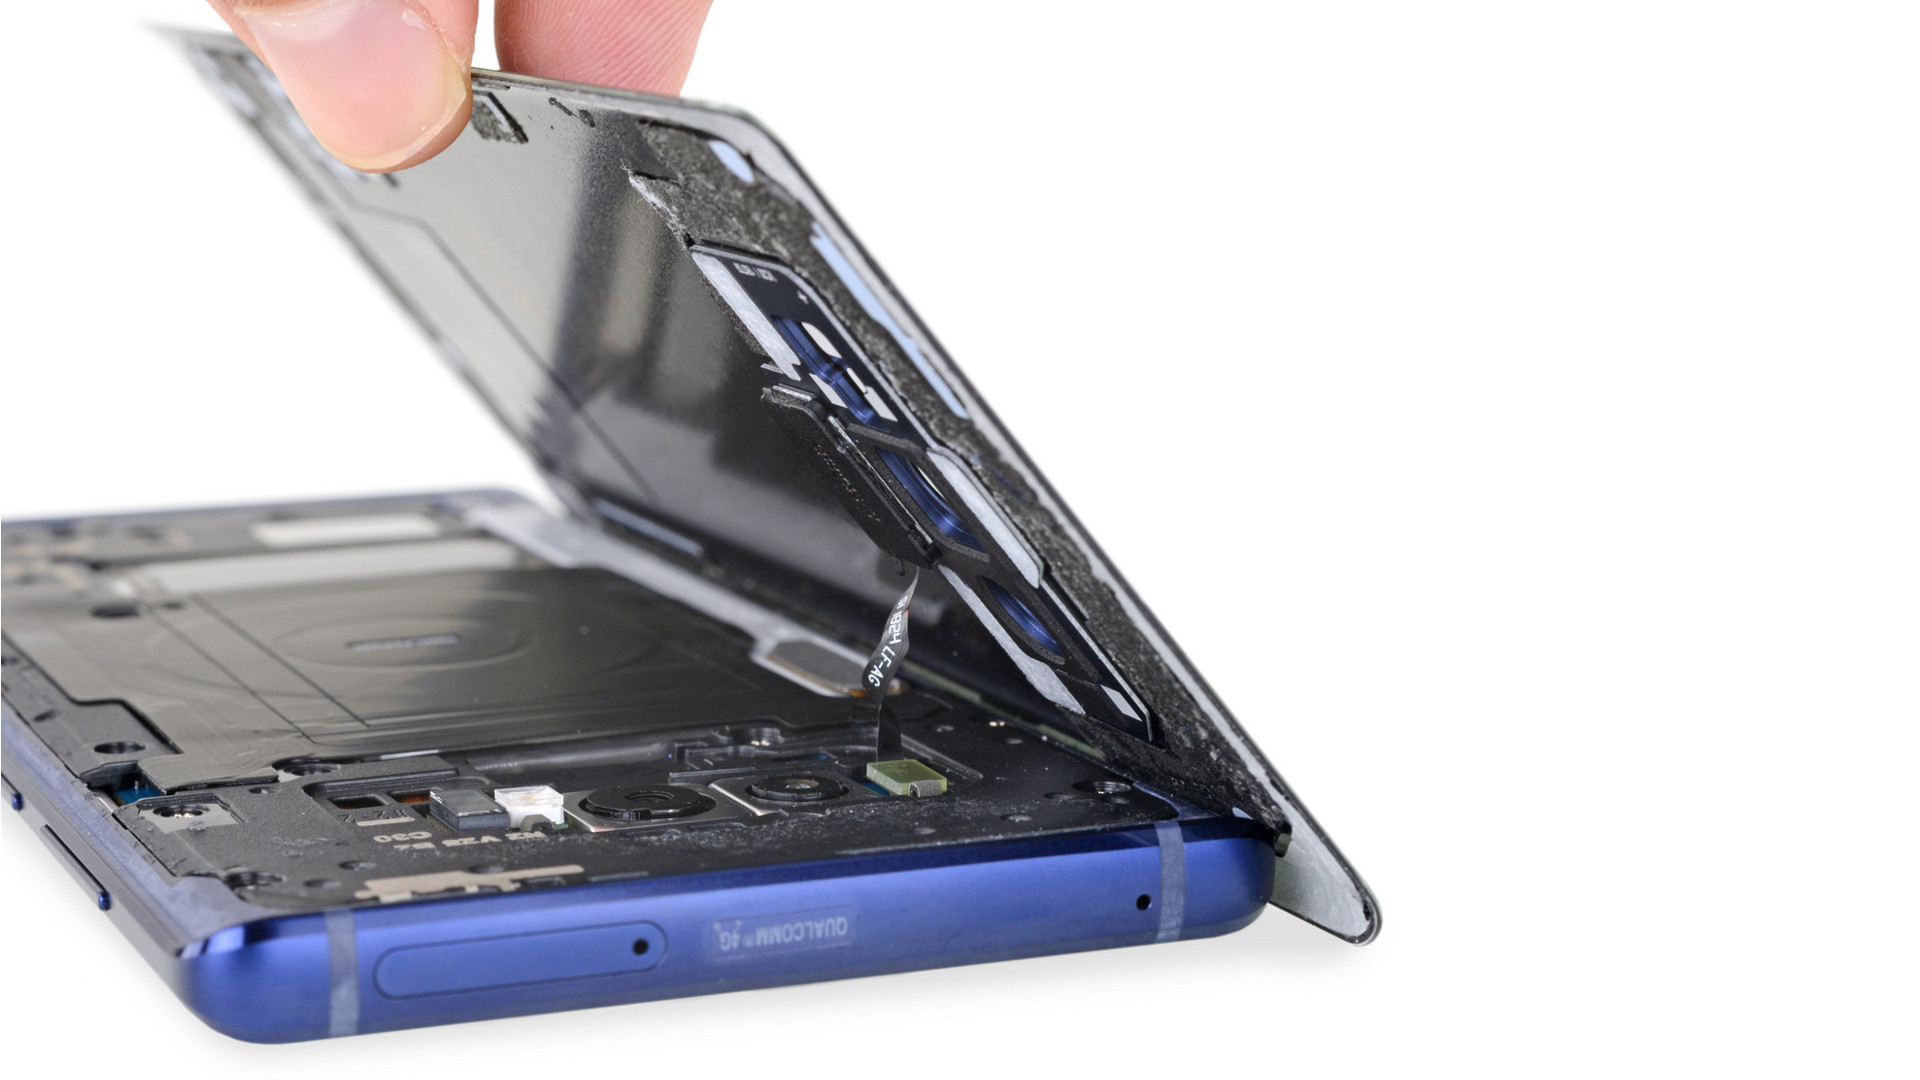 The Galaxy Note 9 teardown, via iFixit.